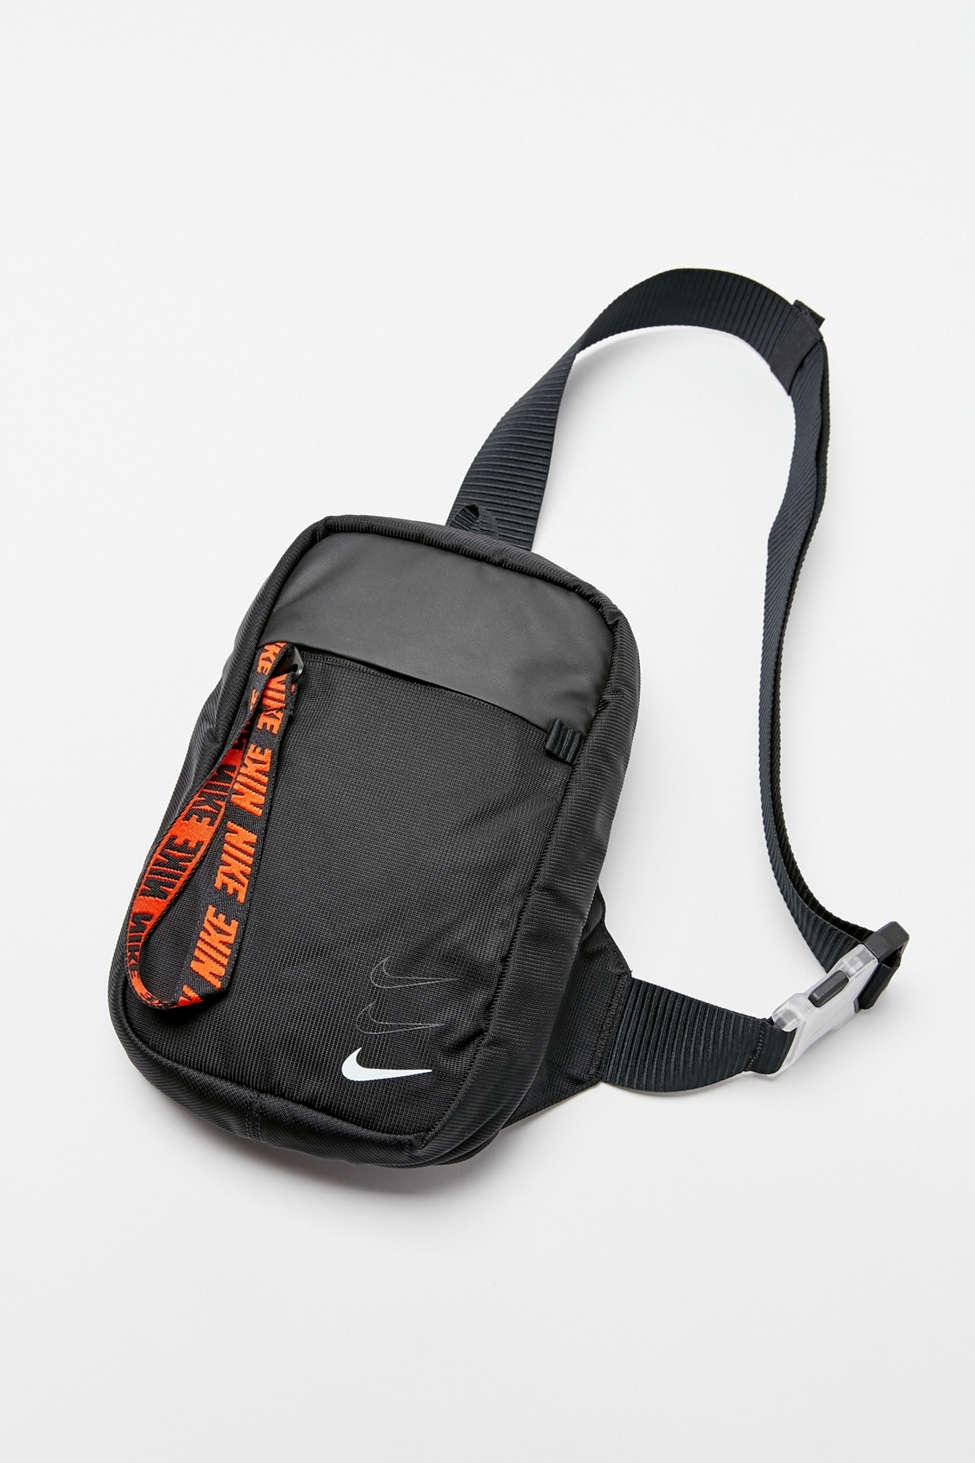 Nike Nike Sportswear Essential Sling Bag in Black | Lyst